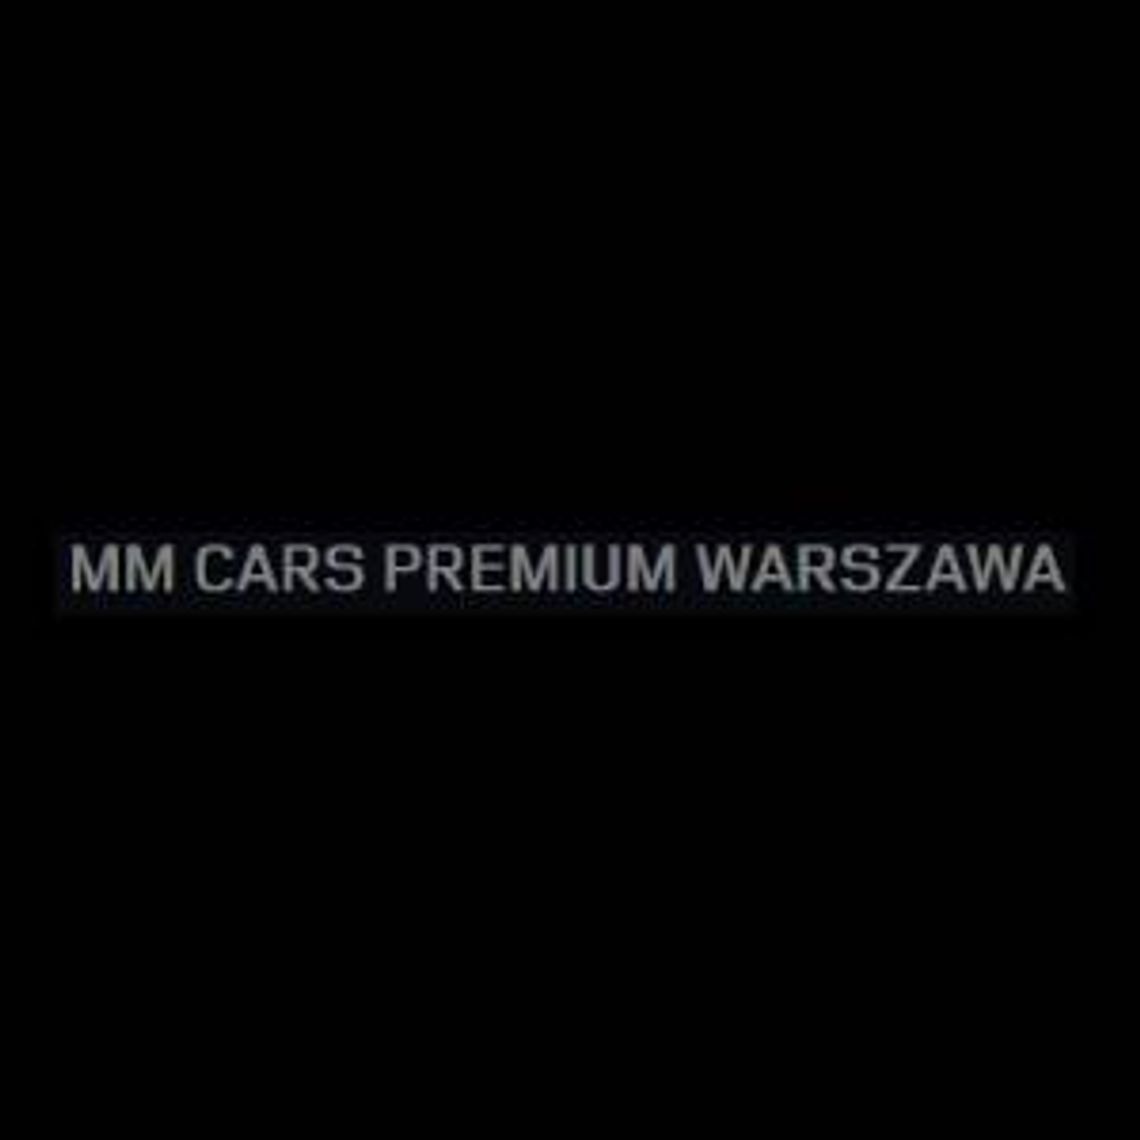 Salon Jaguara - MM Cars Premium 